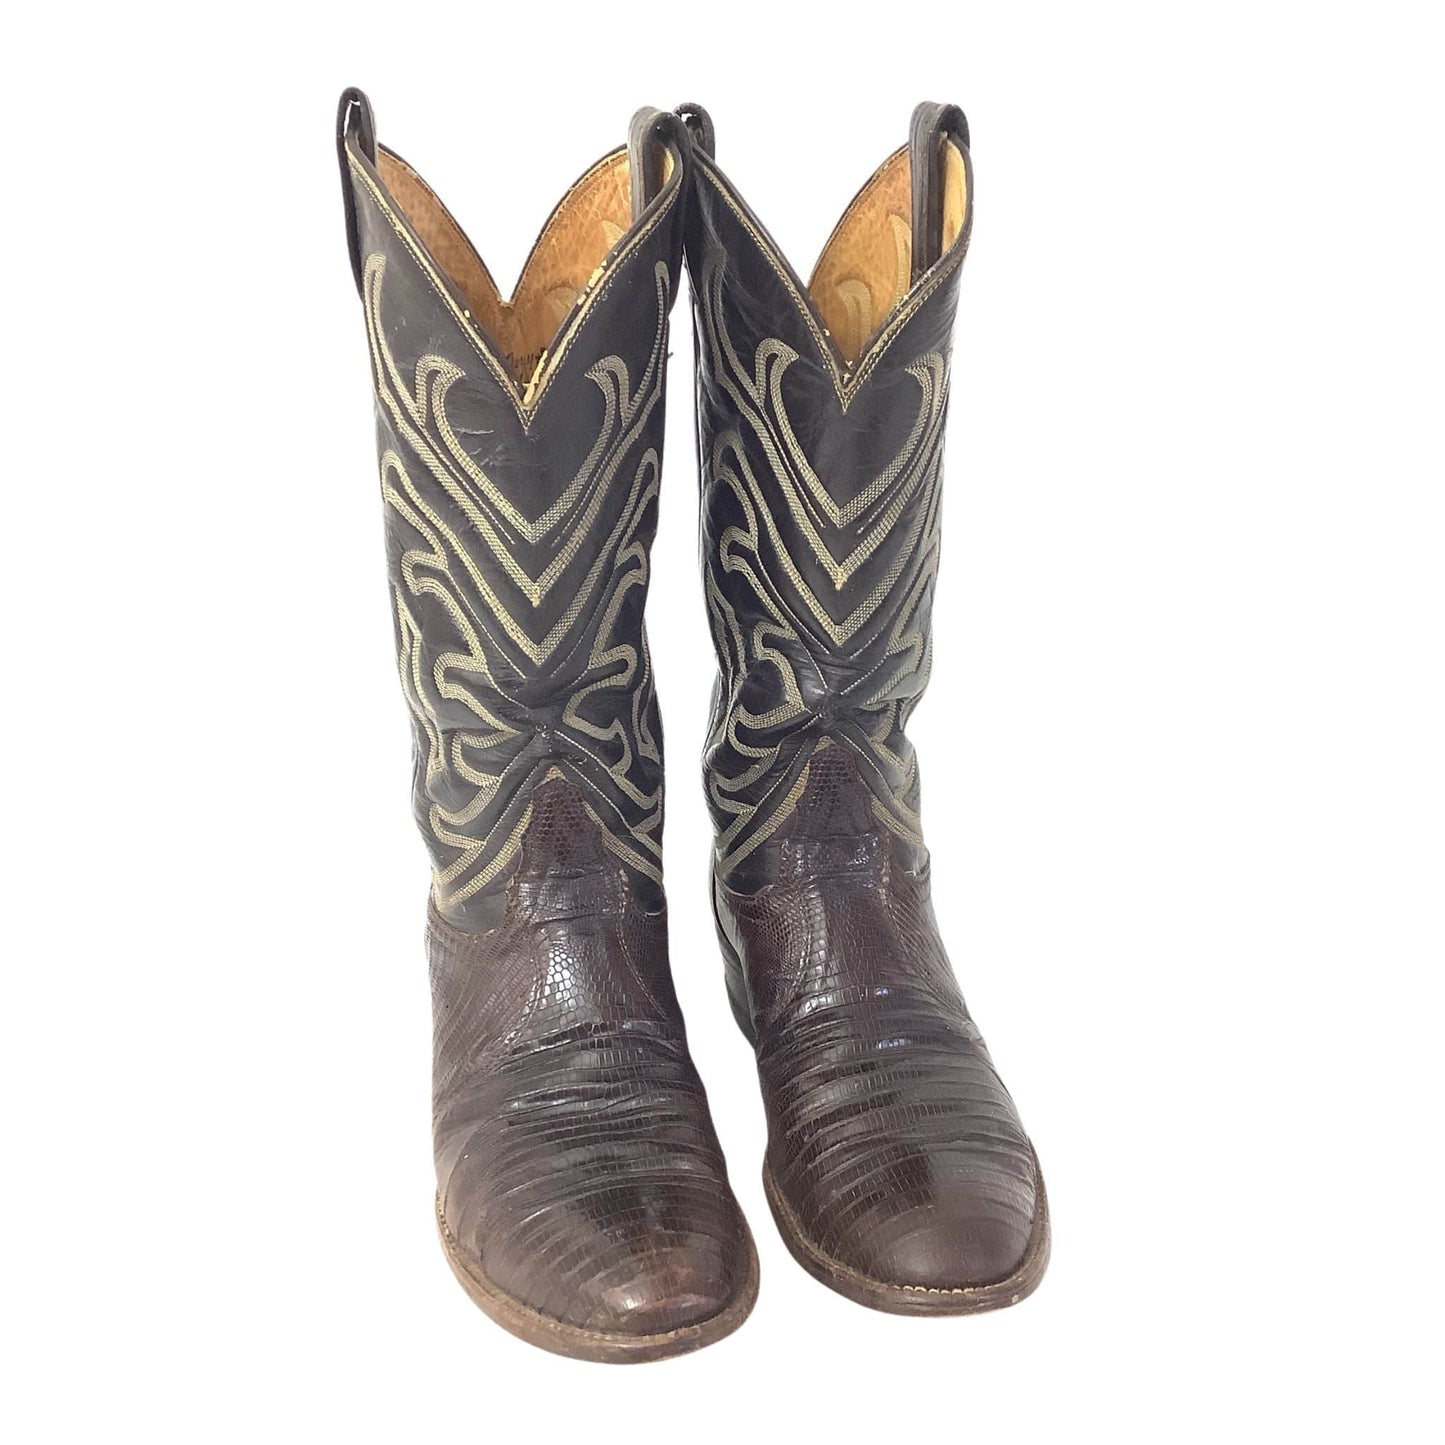 Vintage Tony Lama Boots 7 / Brown / Vintage 1980s